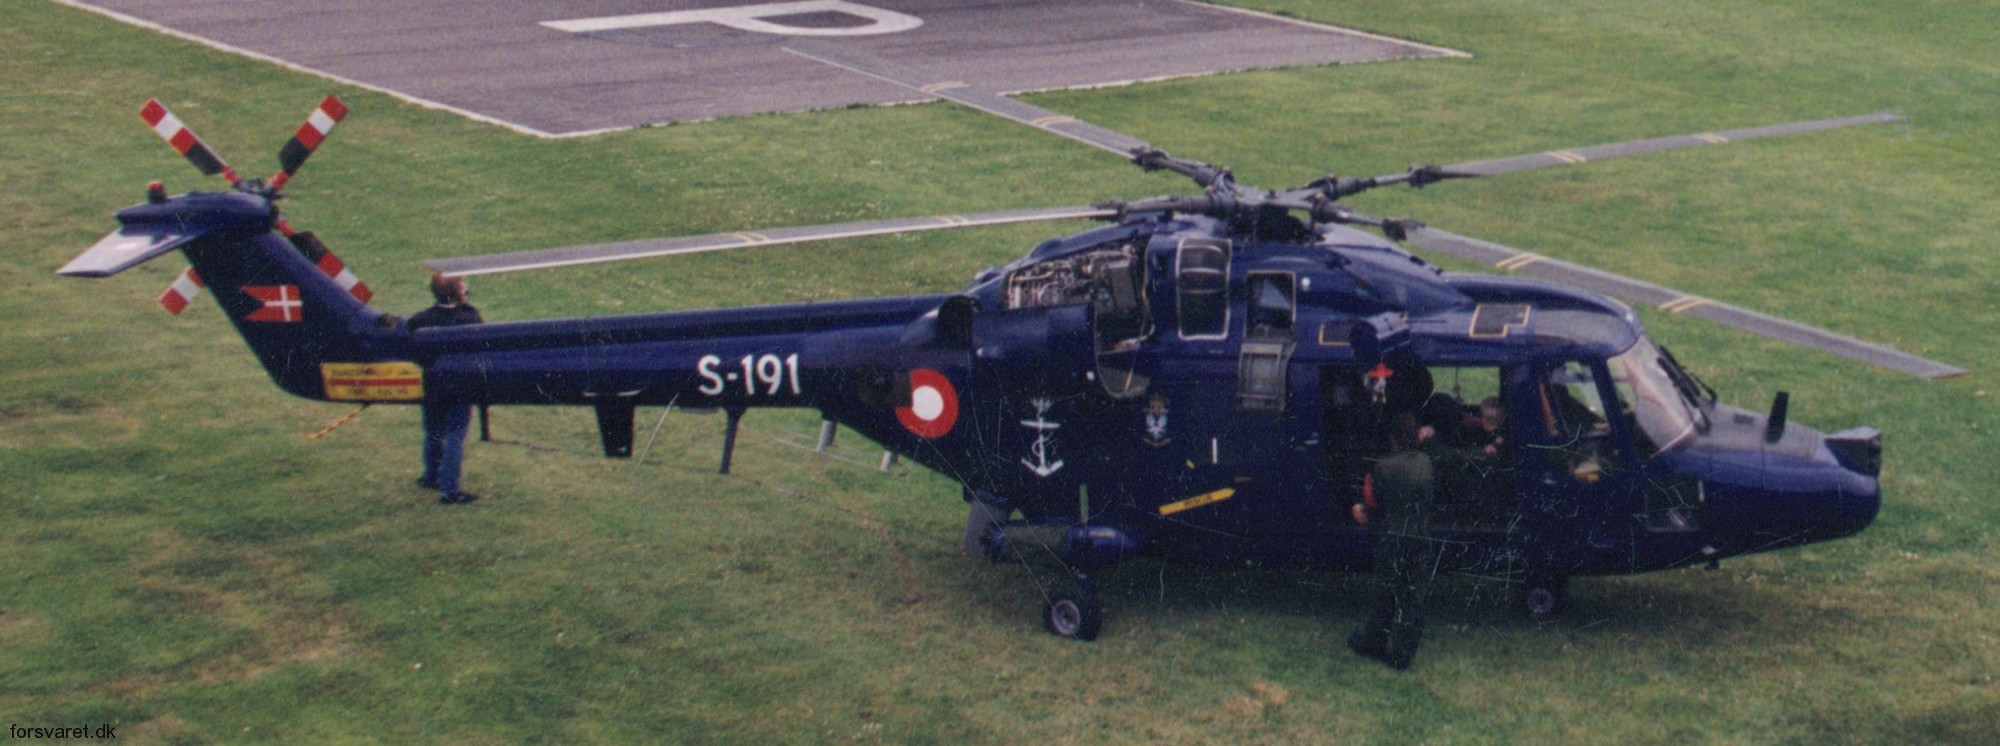 lynx mk.80 mk.90b helicopter westland royal danish navy air force kongelige danske marine flyvevabnet s-191 11